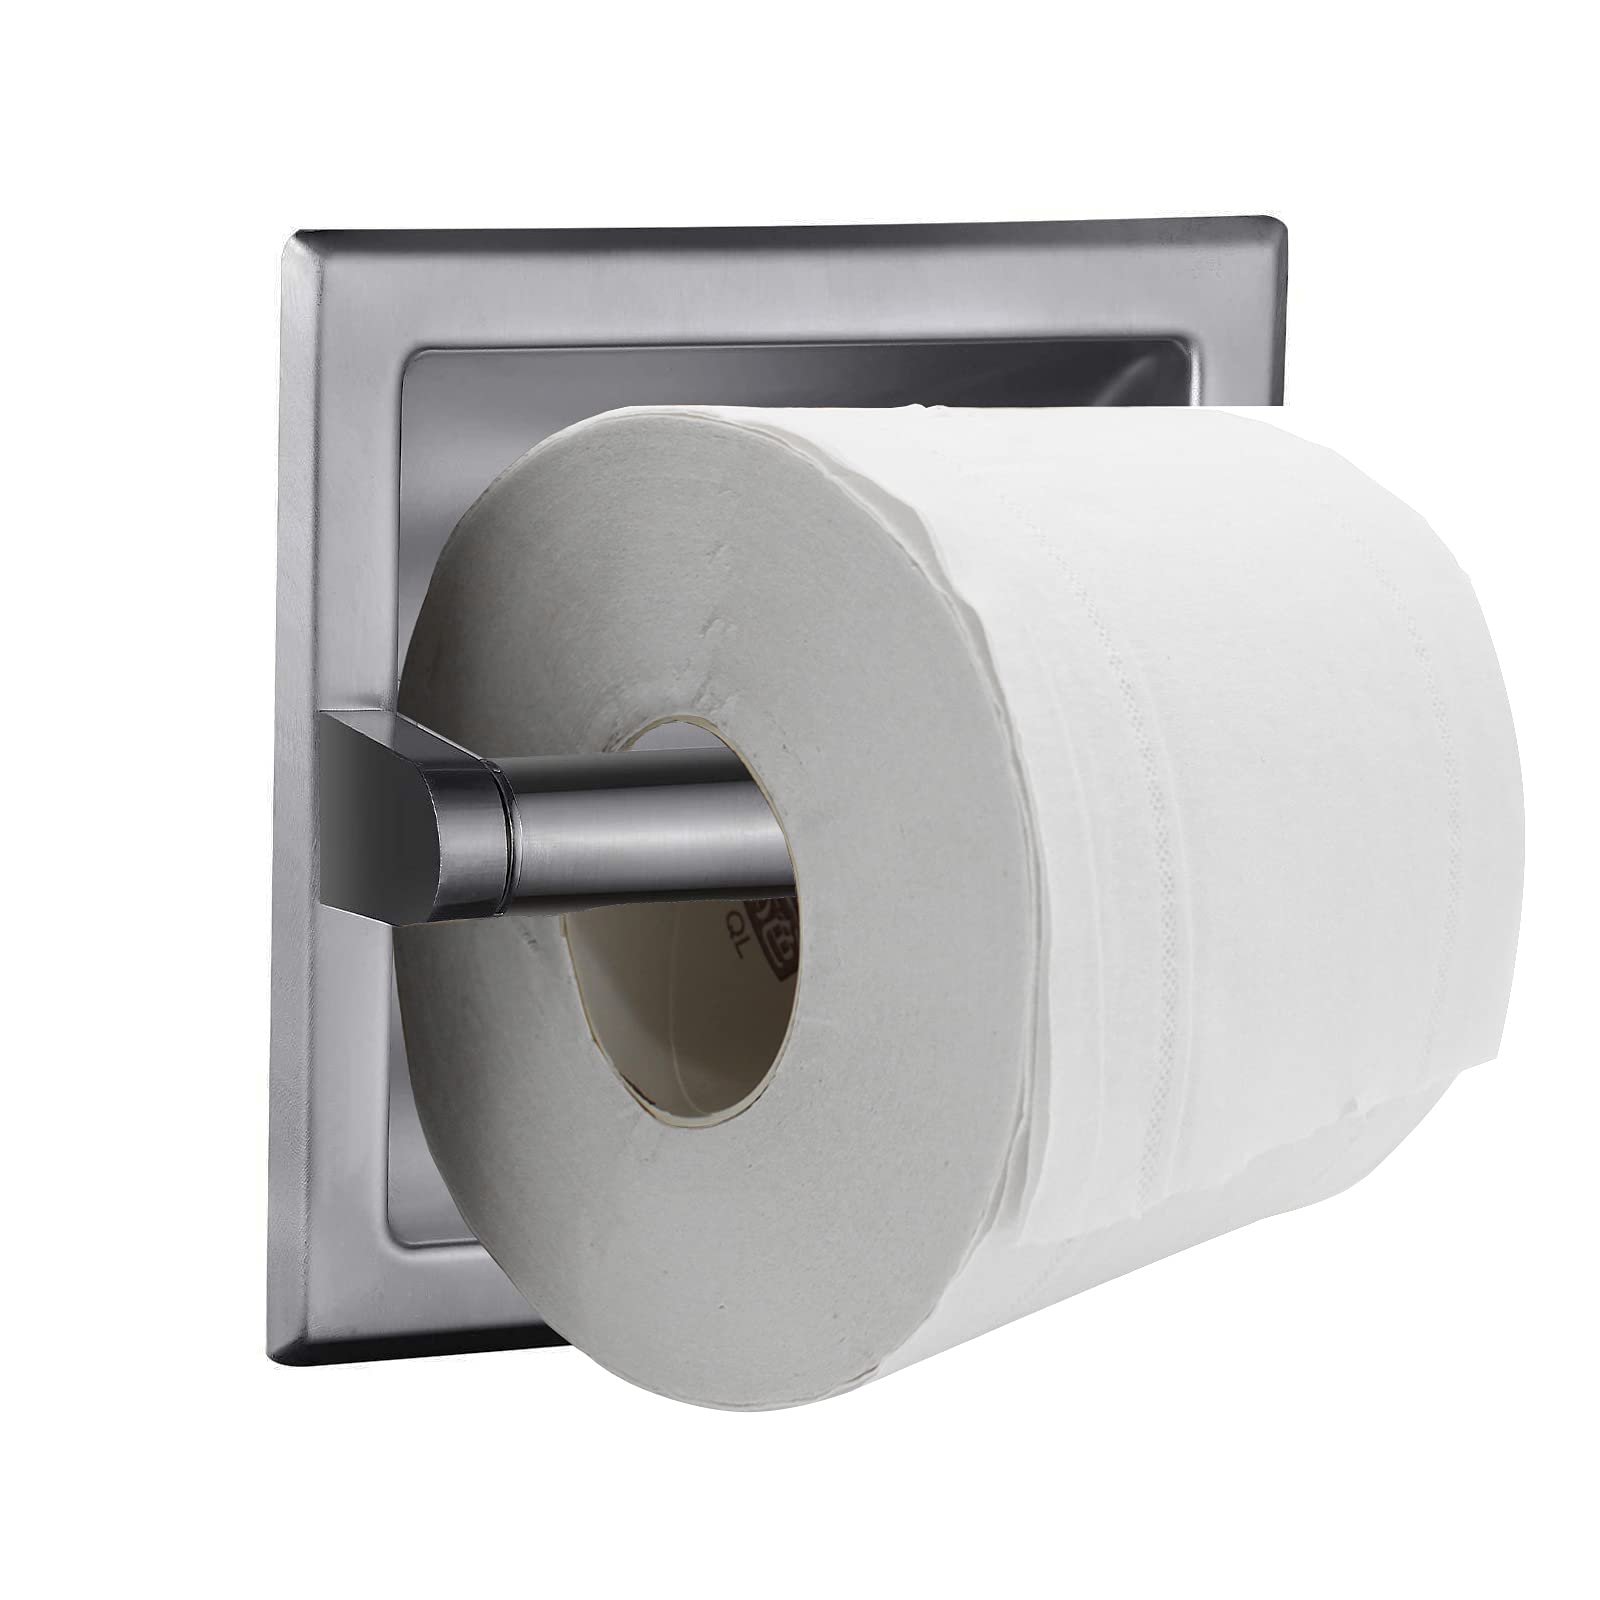 toilet paper holder for sale near me Toilet holder paper recessed lulusoso